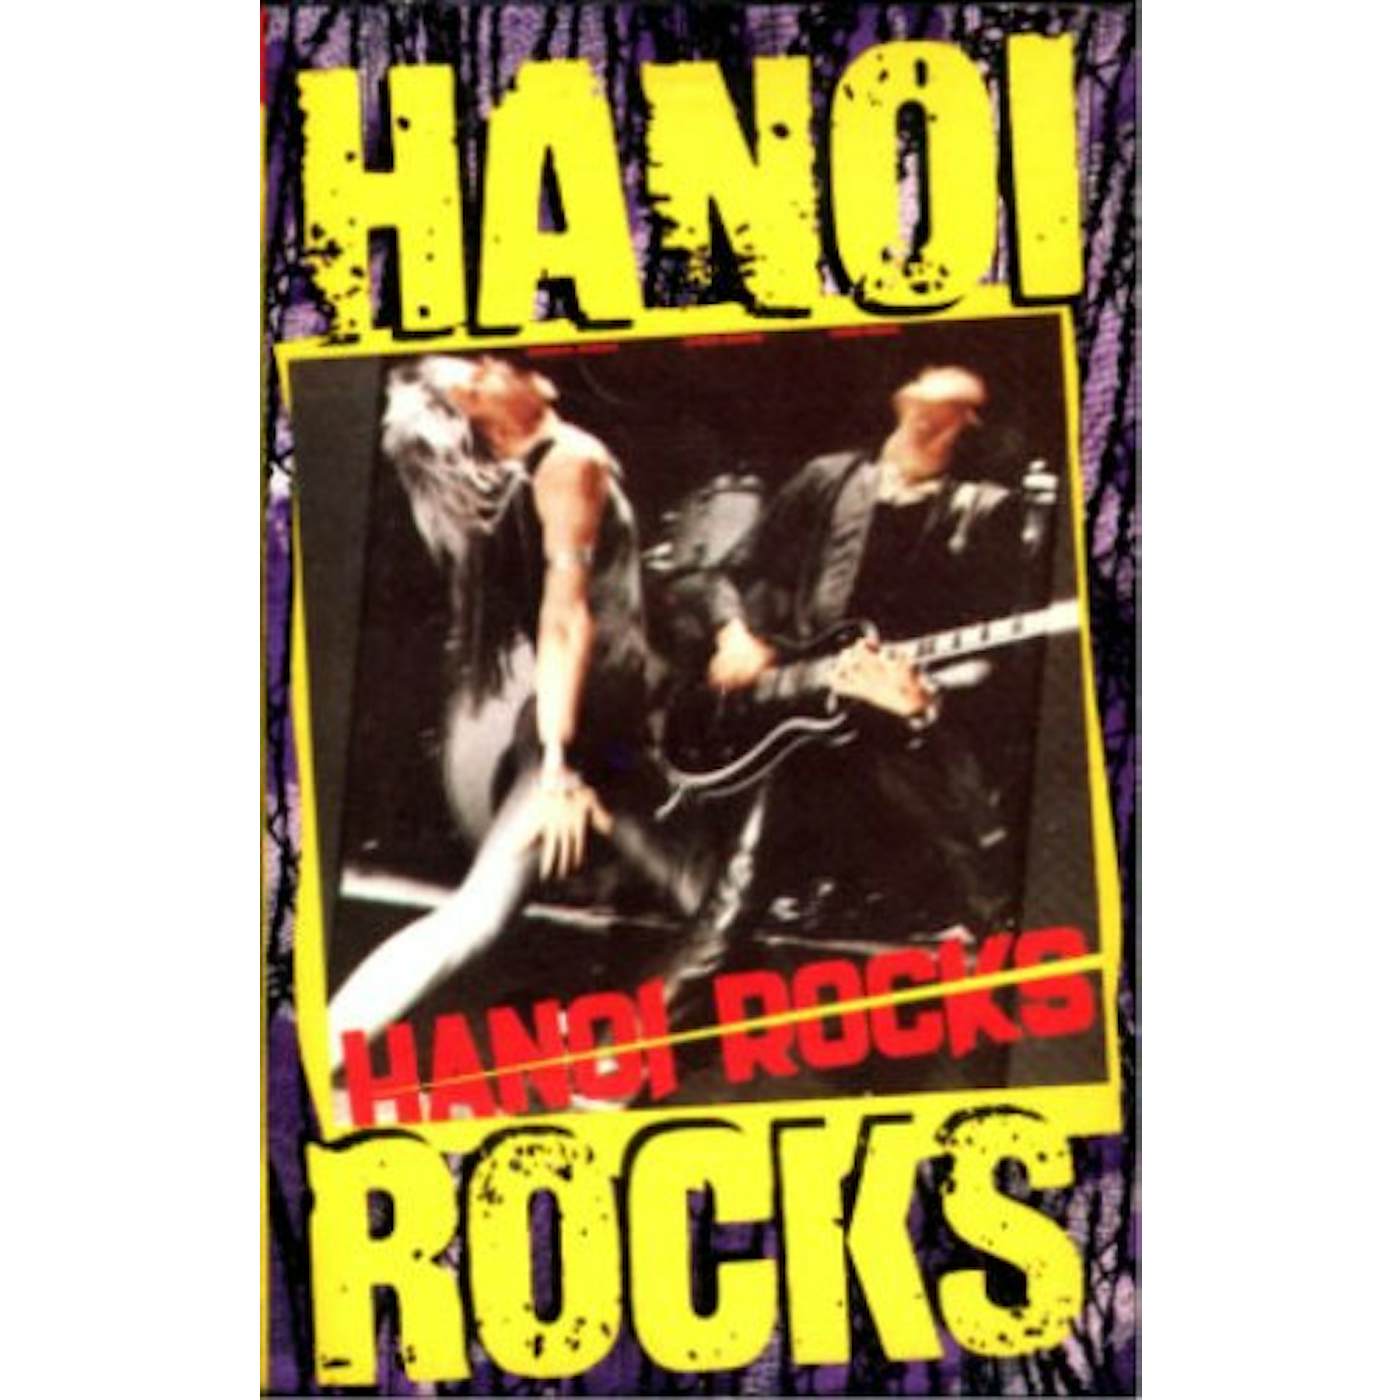 Hanoi Rocks Bangkok Shocks Saigon Shakes Vinyl Record